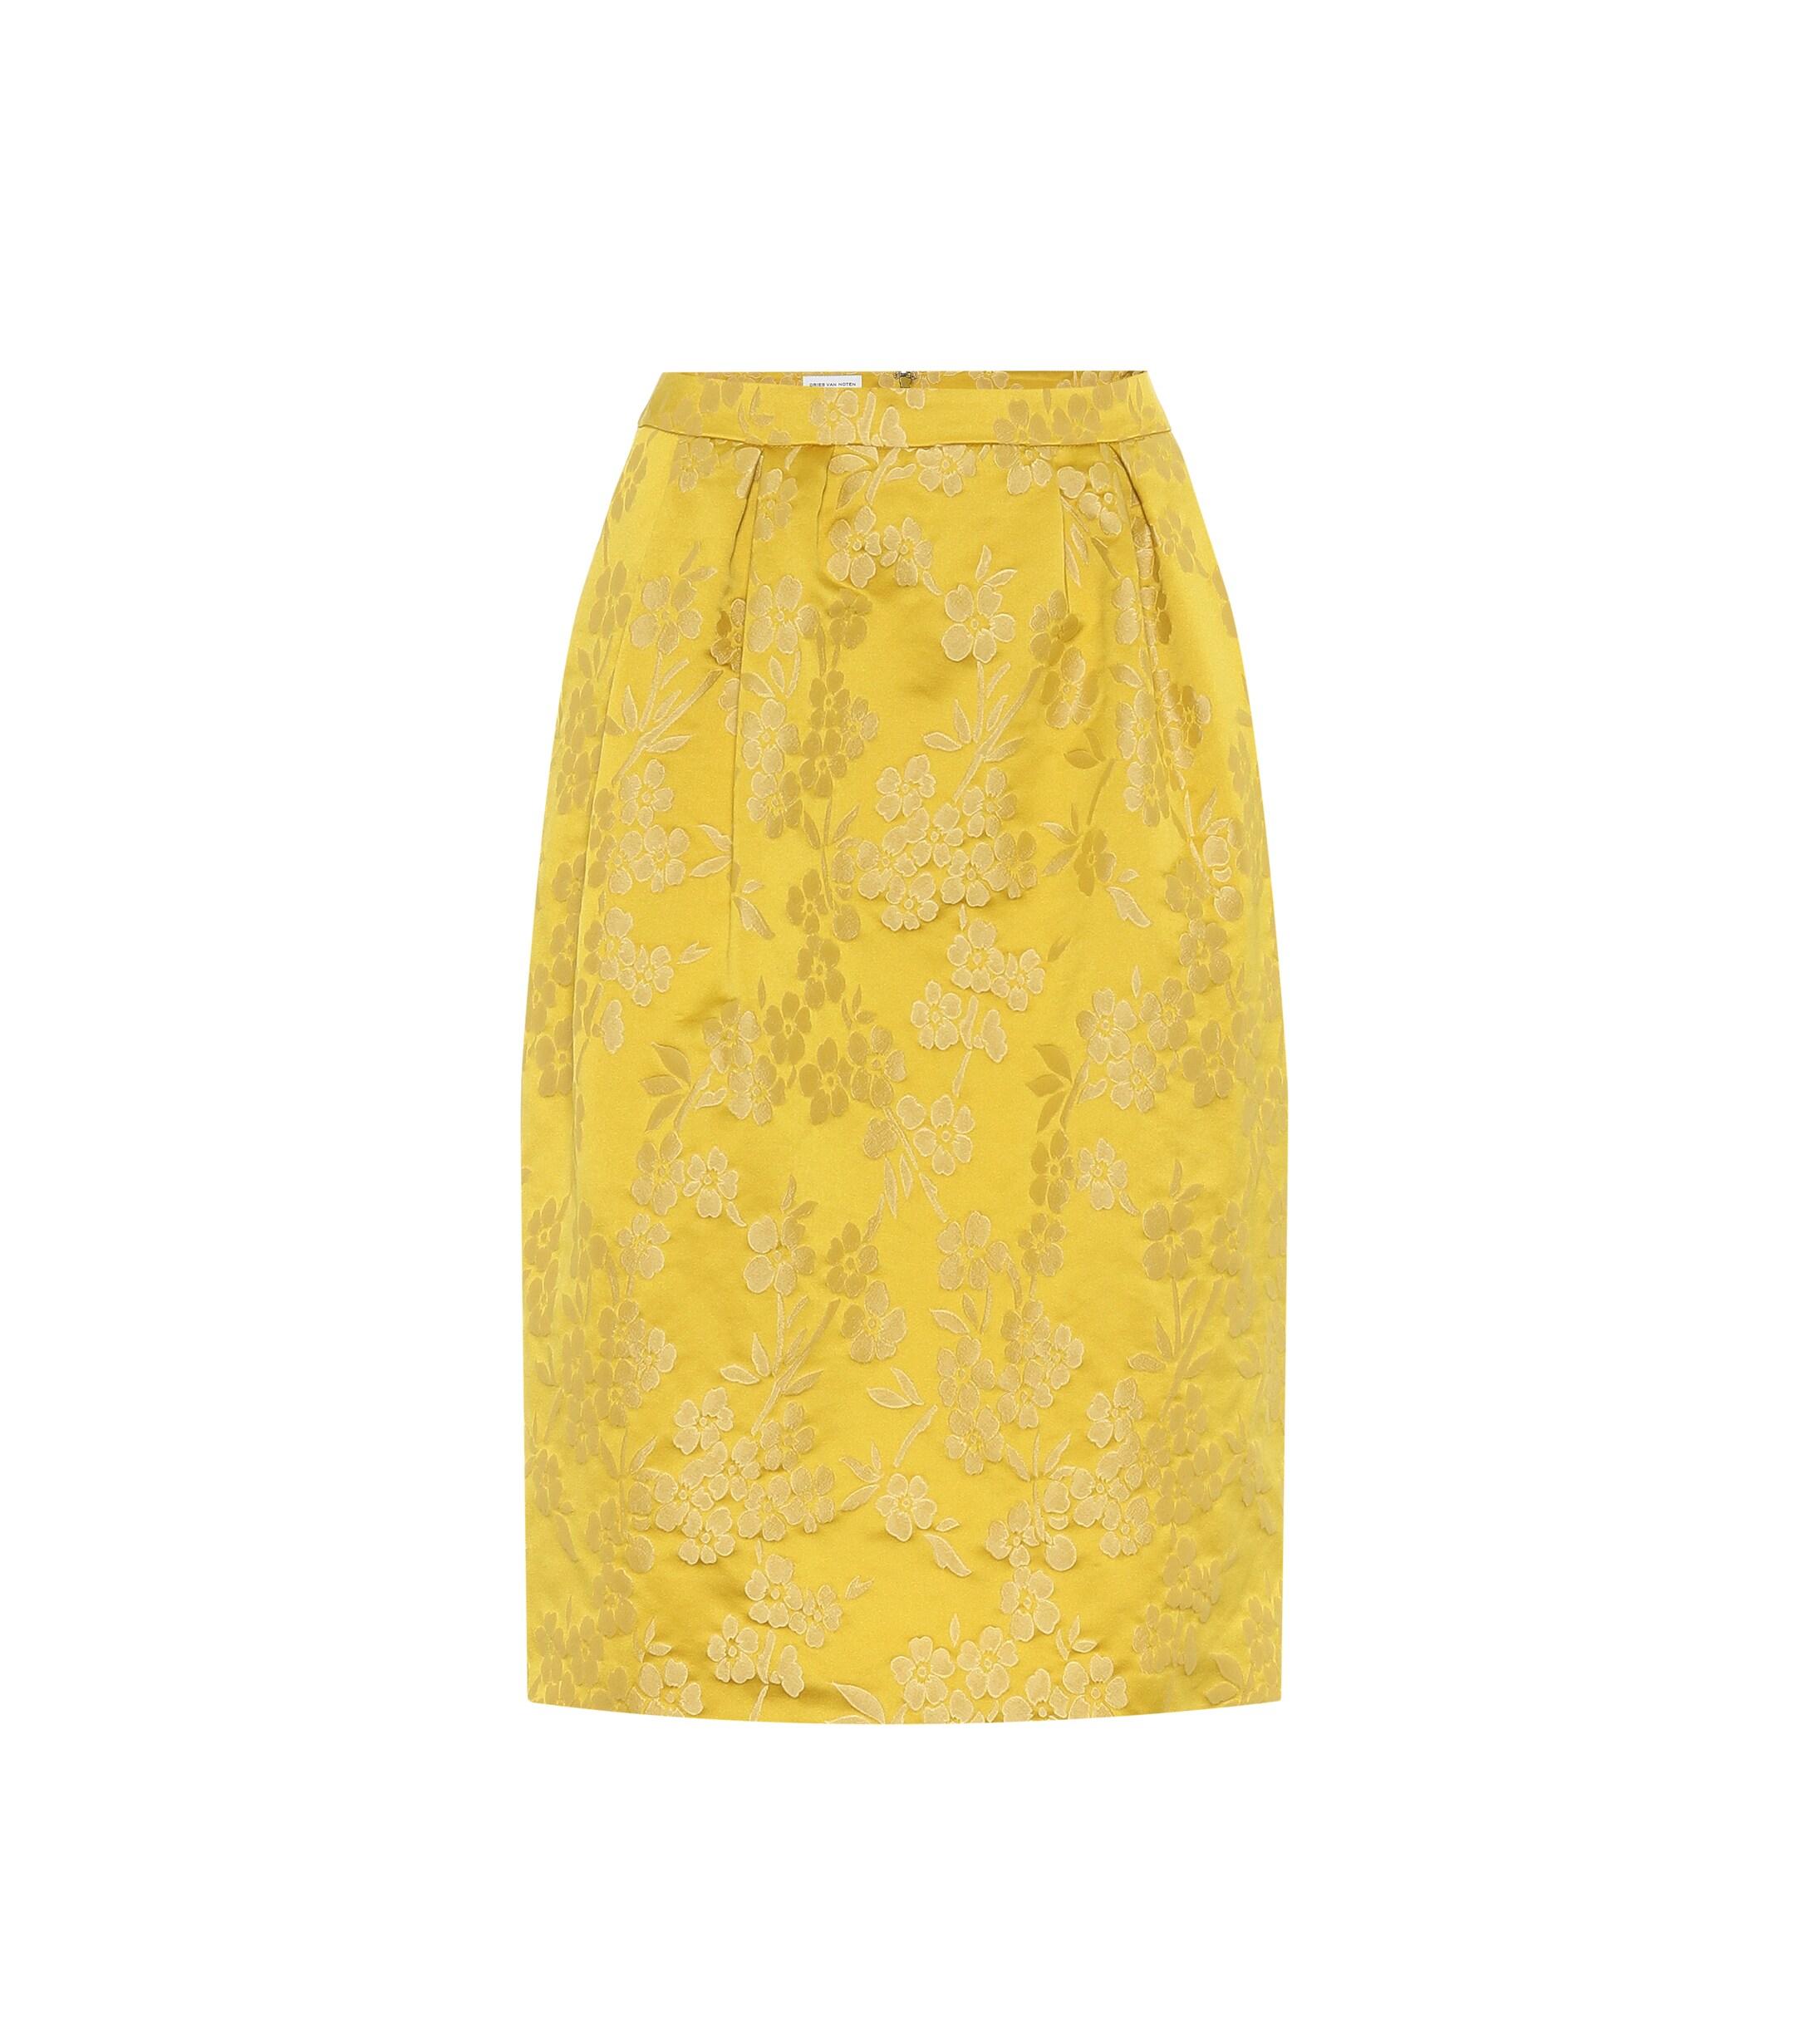 Dries Van Noten Jacquard Midi Skirt in Yellow - Lyst